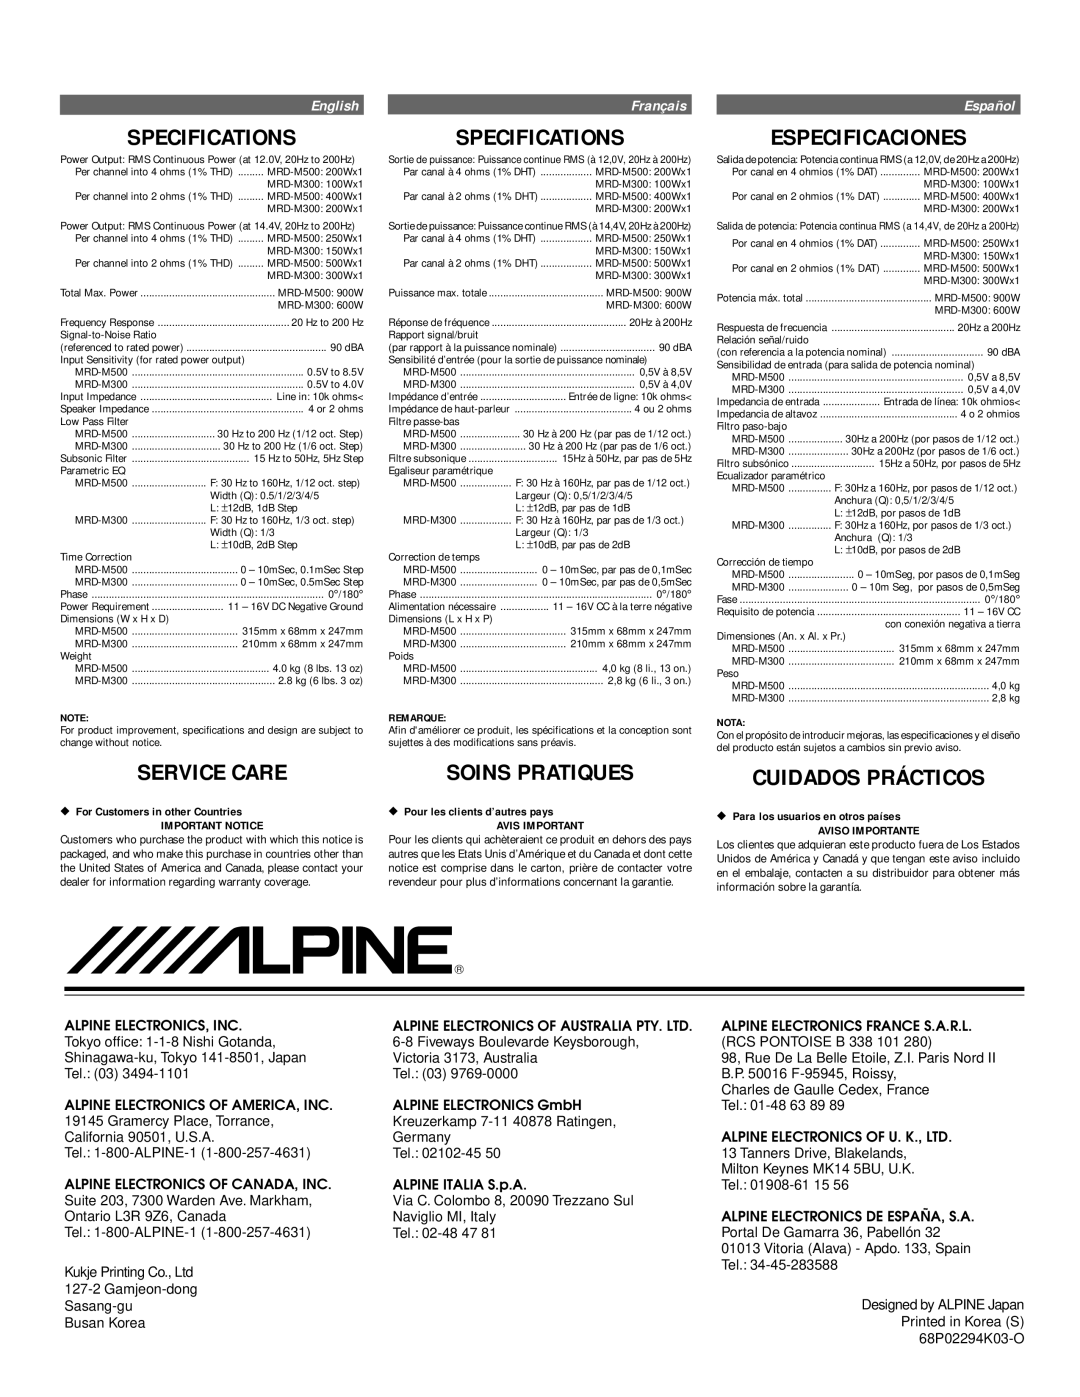 Alpine MRD-M500 Specifications, Service Care, Soins Pratiques, Especificaciones, Cuidados Prácticos, English, Français 